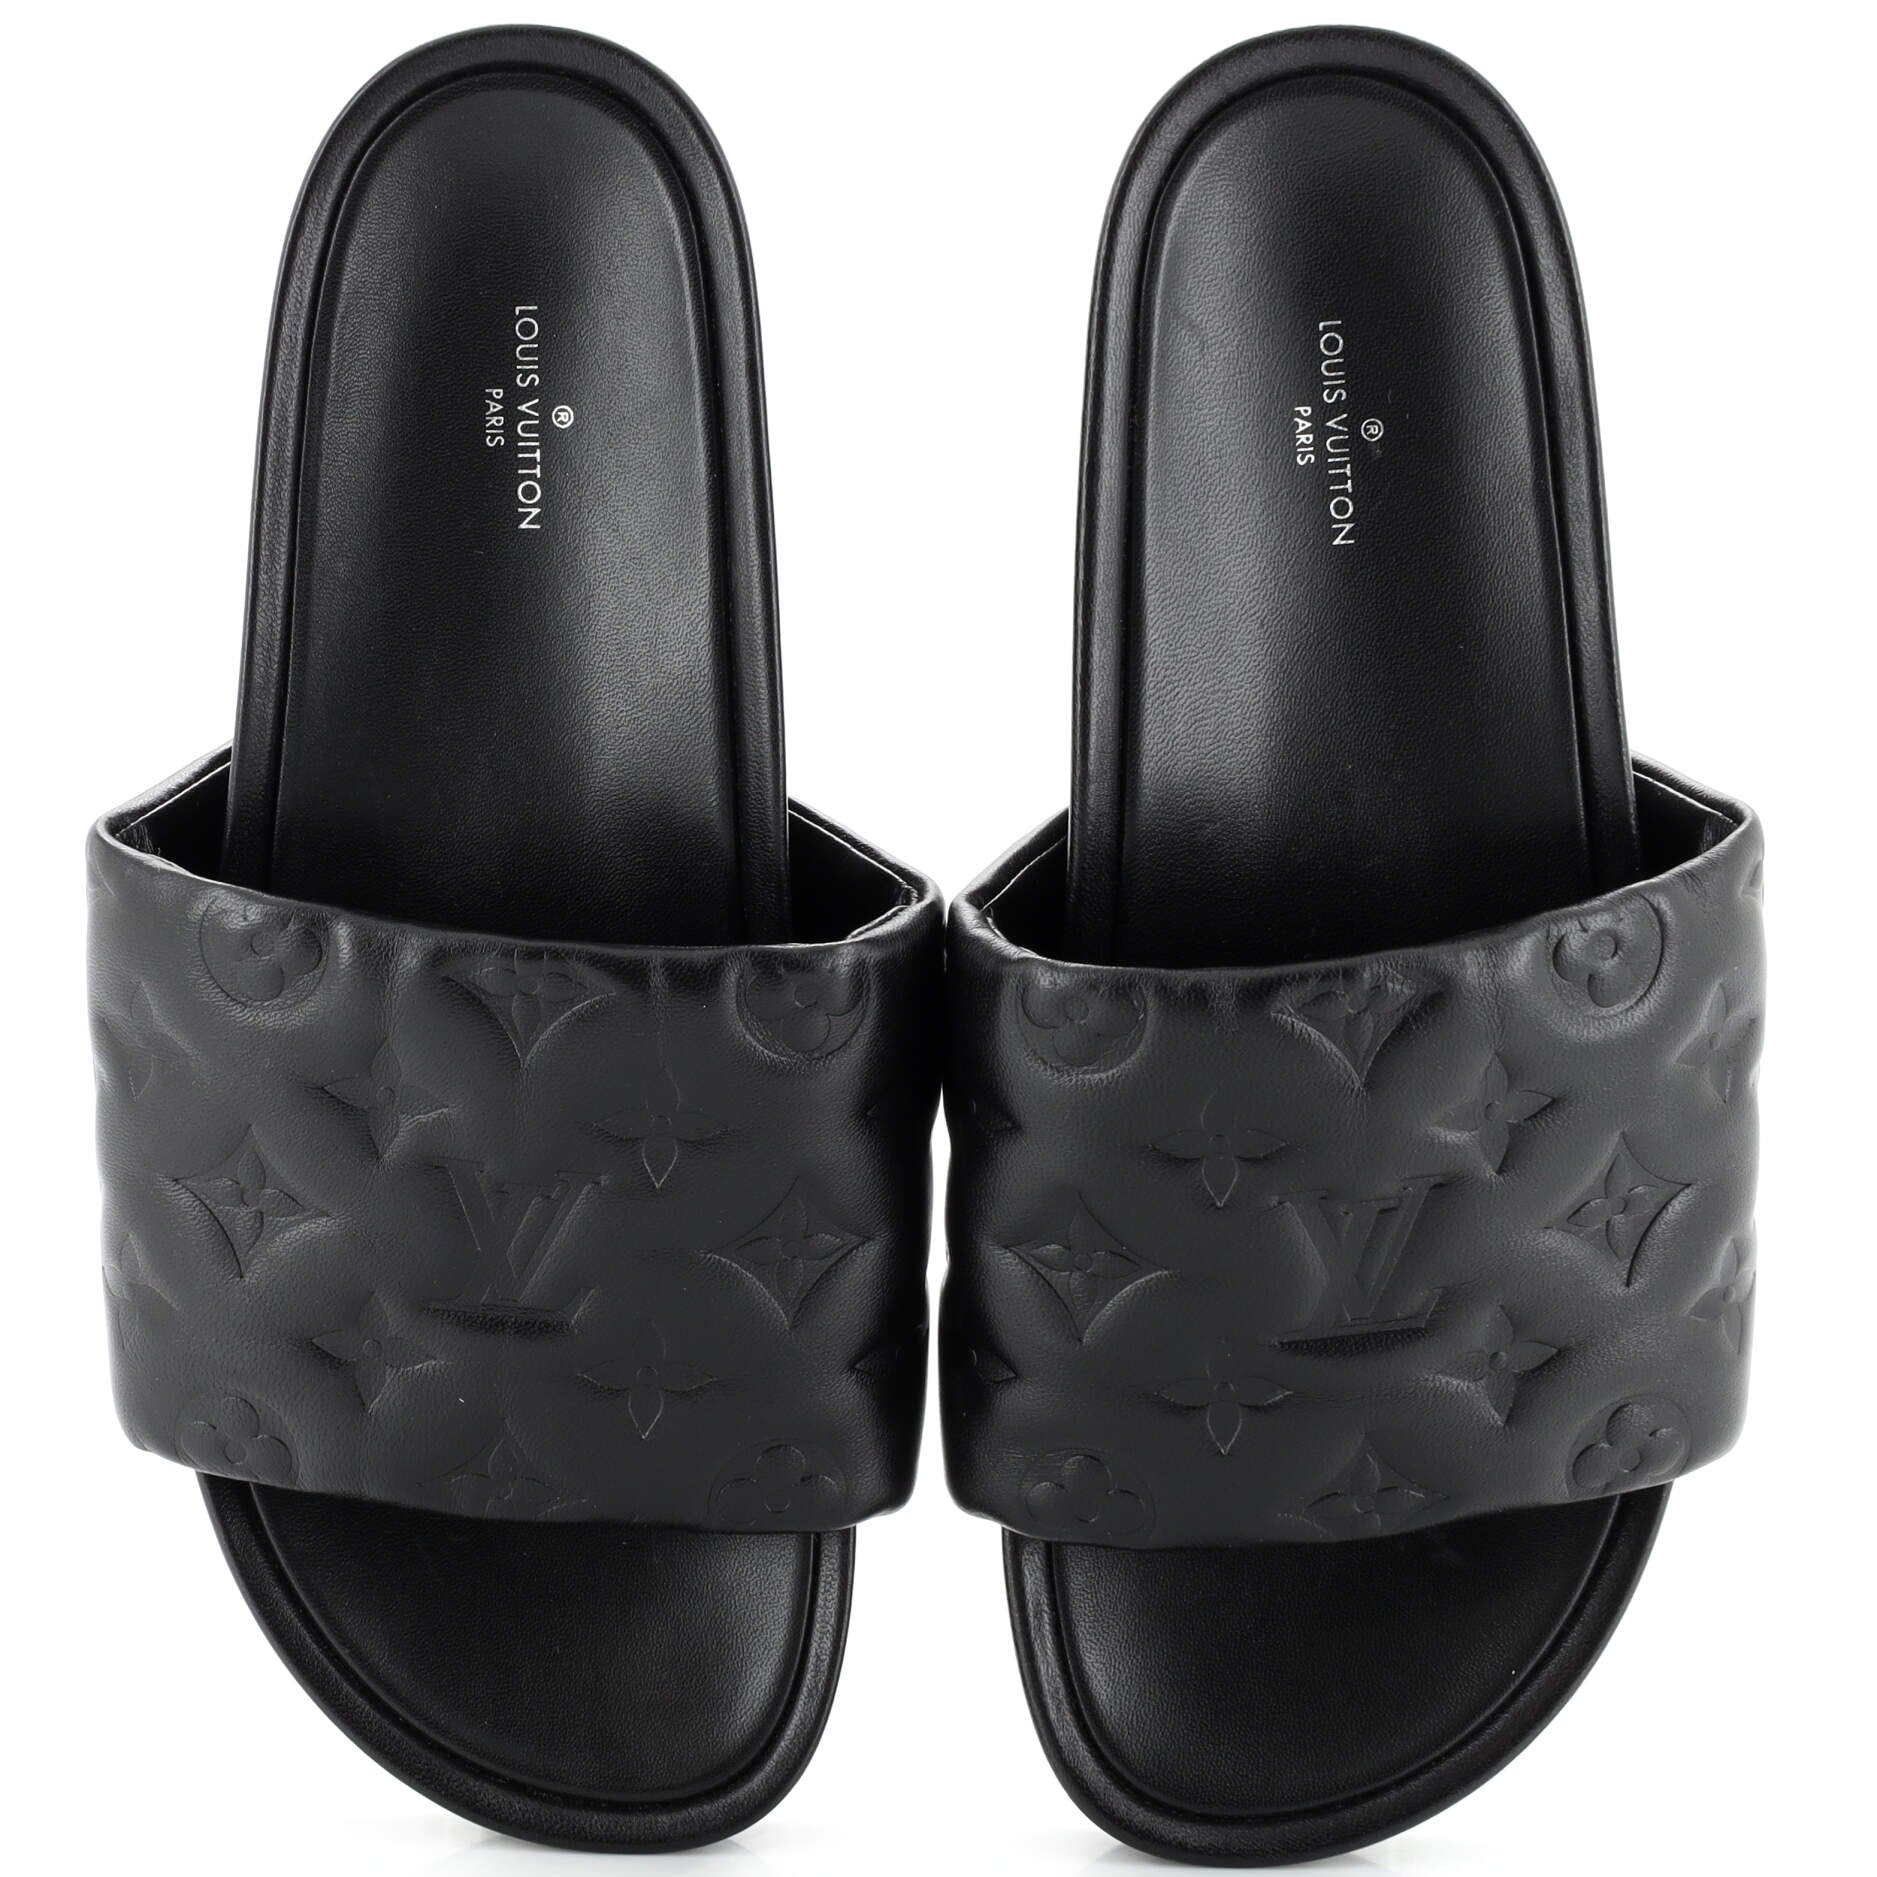 Louis Vuitton Women's Pool Pillow Comfort Mule Sandals Polka Dot